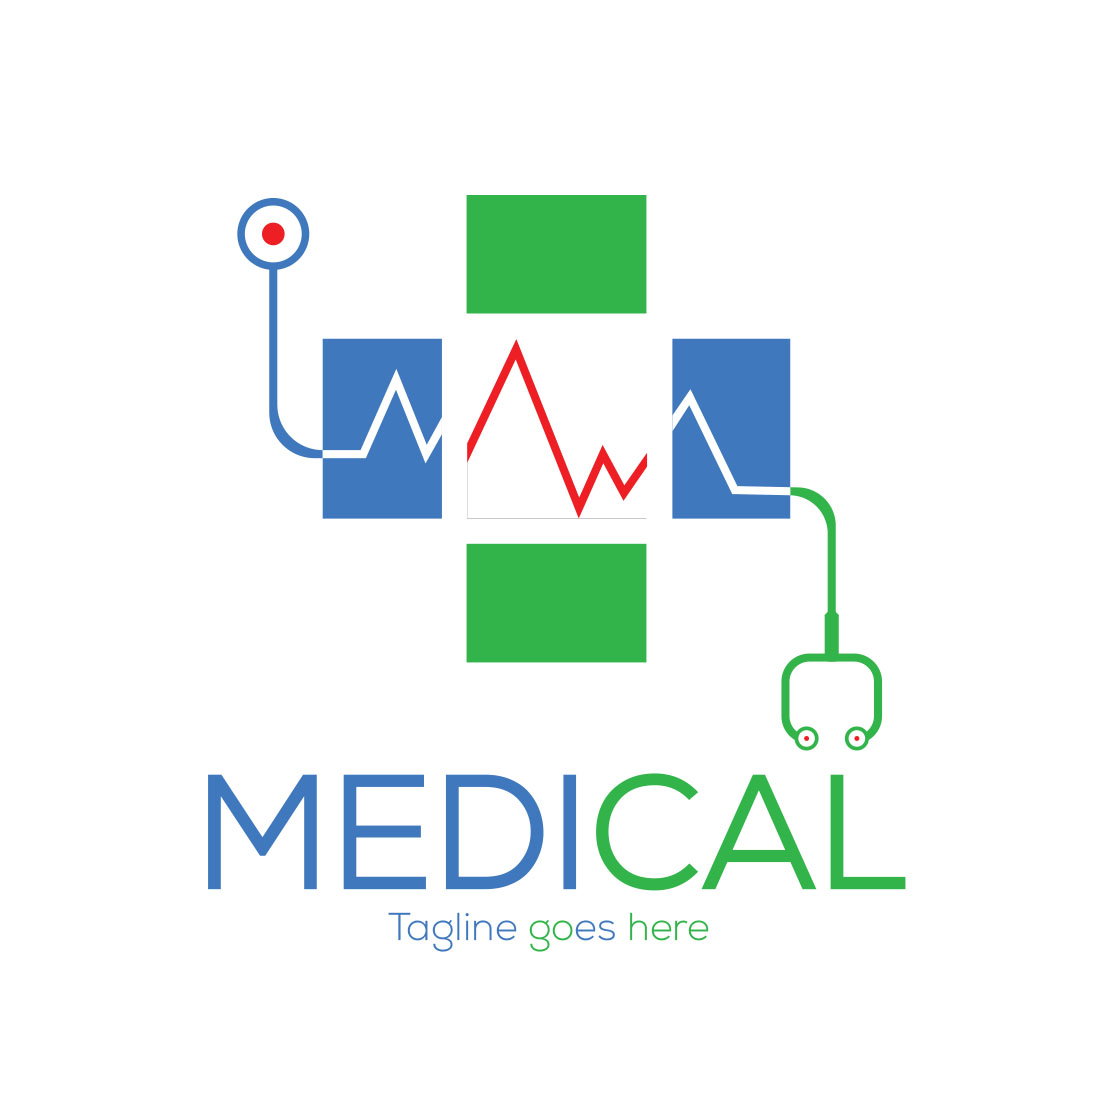 Creative and Unique Medical Logo Design presentation.